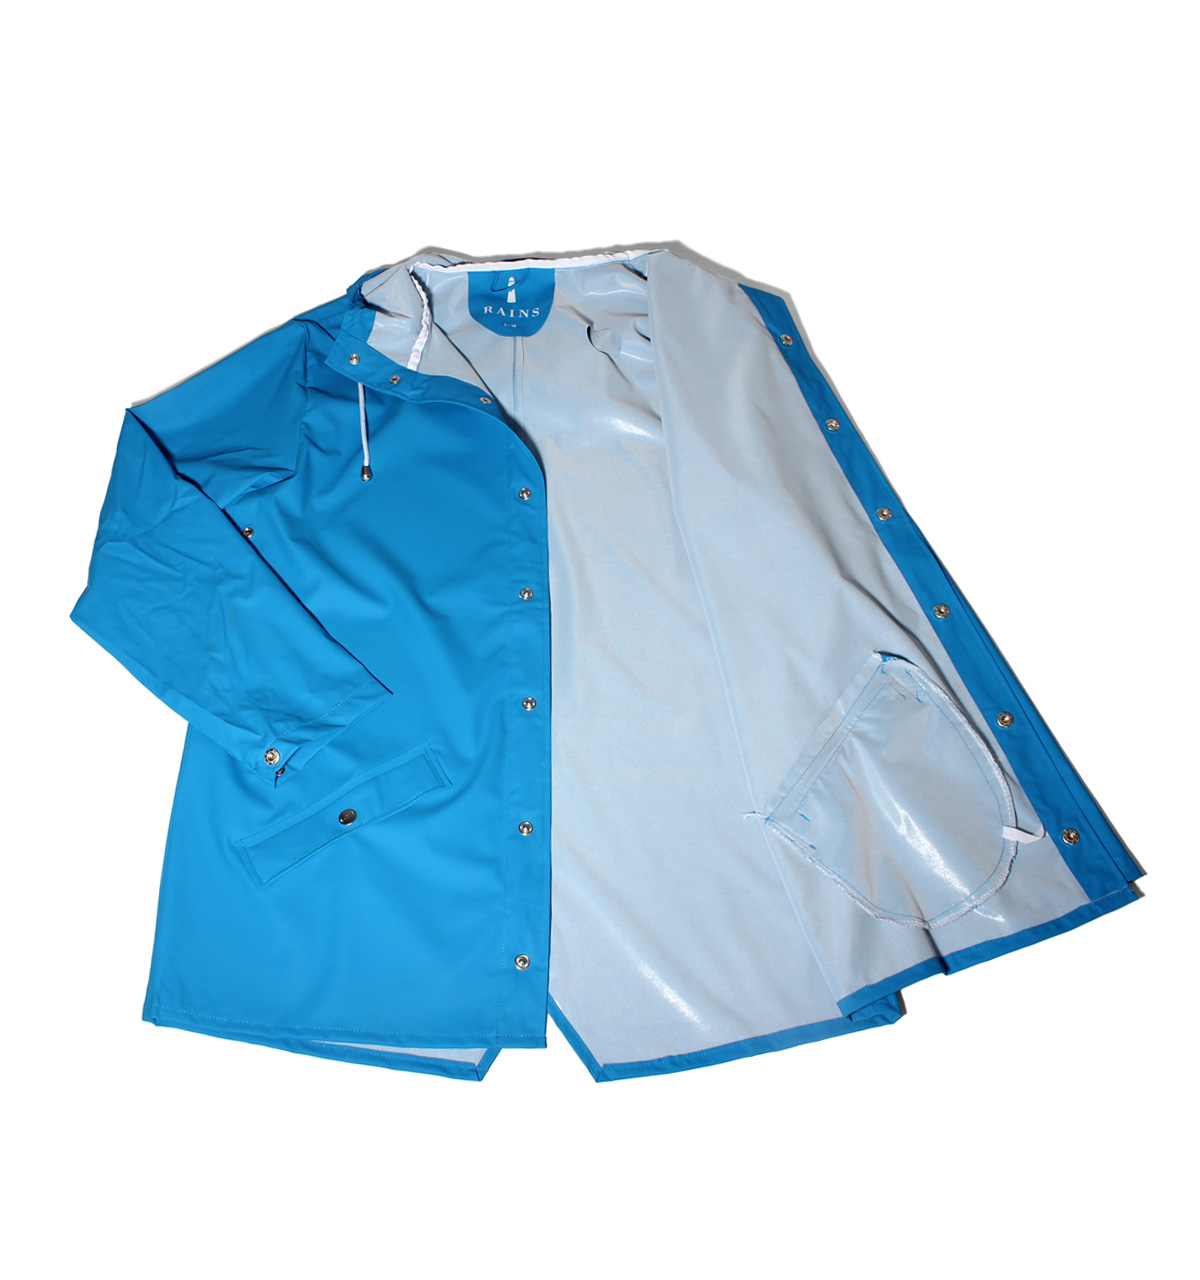 RAINS Sky Blue Waterproof Hooded Jacket from Woodhouse £75